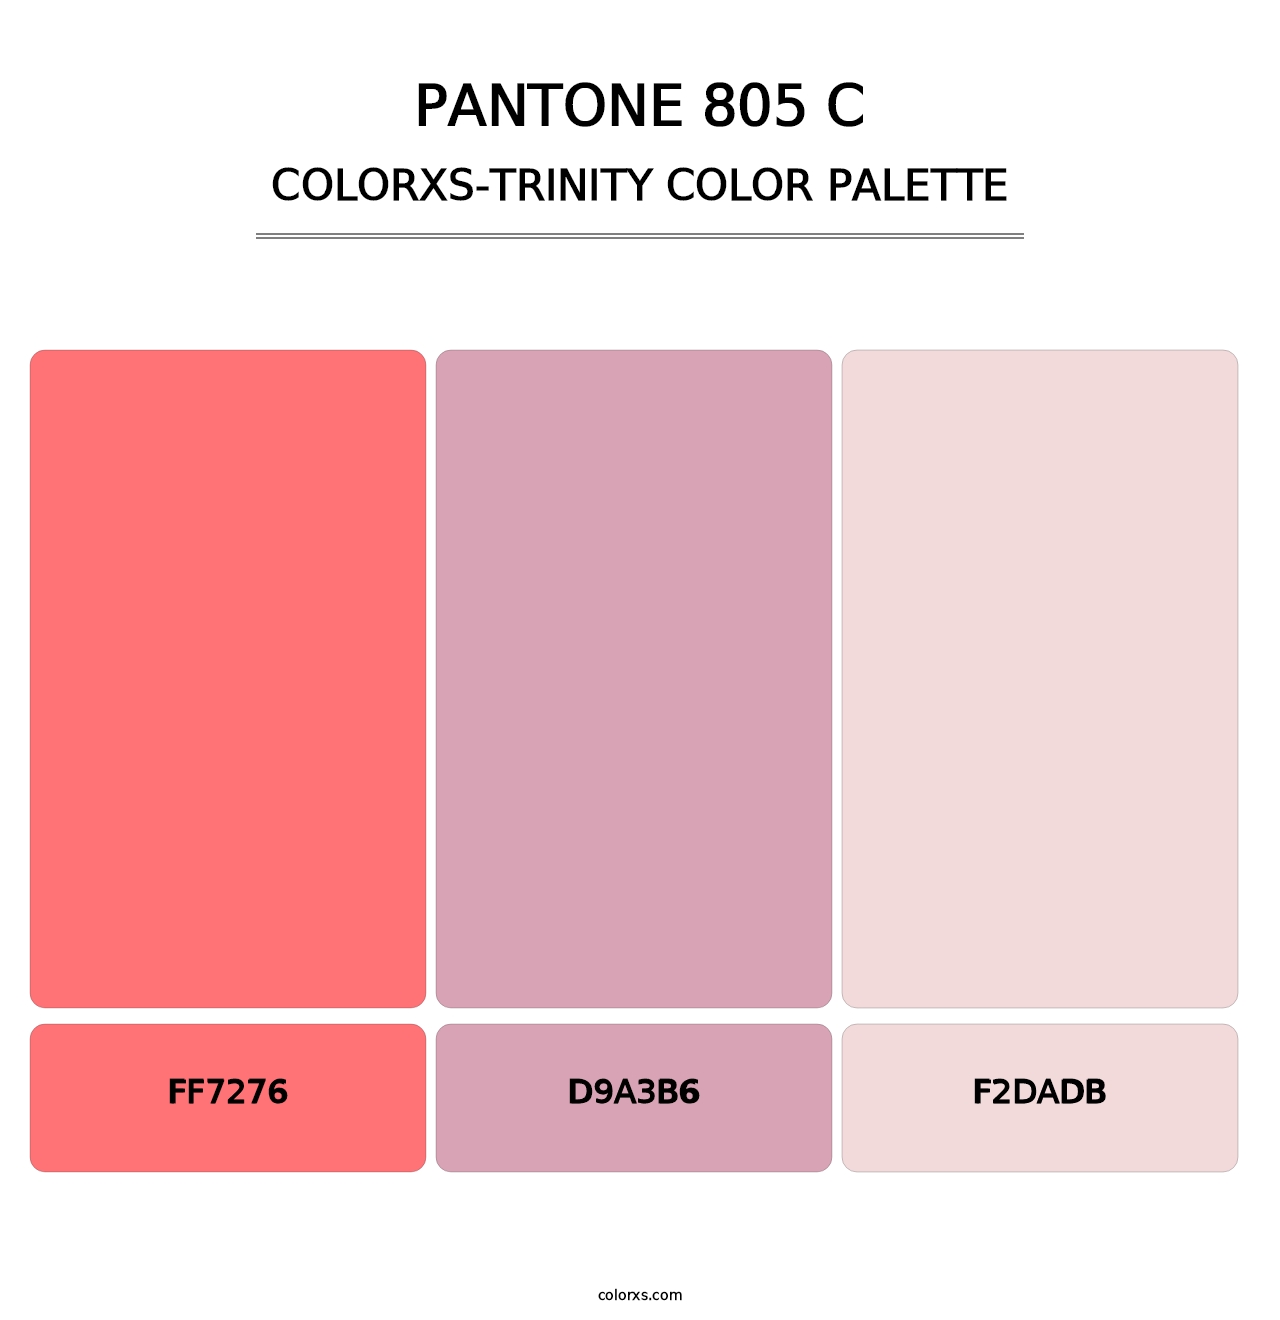 PANTONE 805 C - Colorxs Trinity Palette